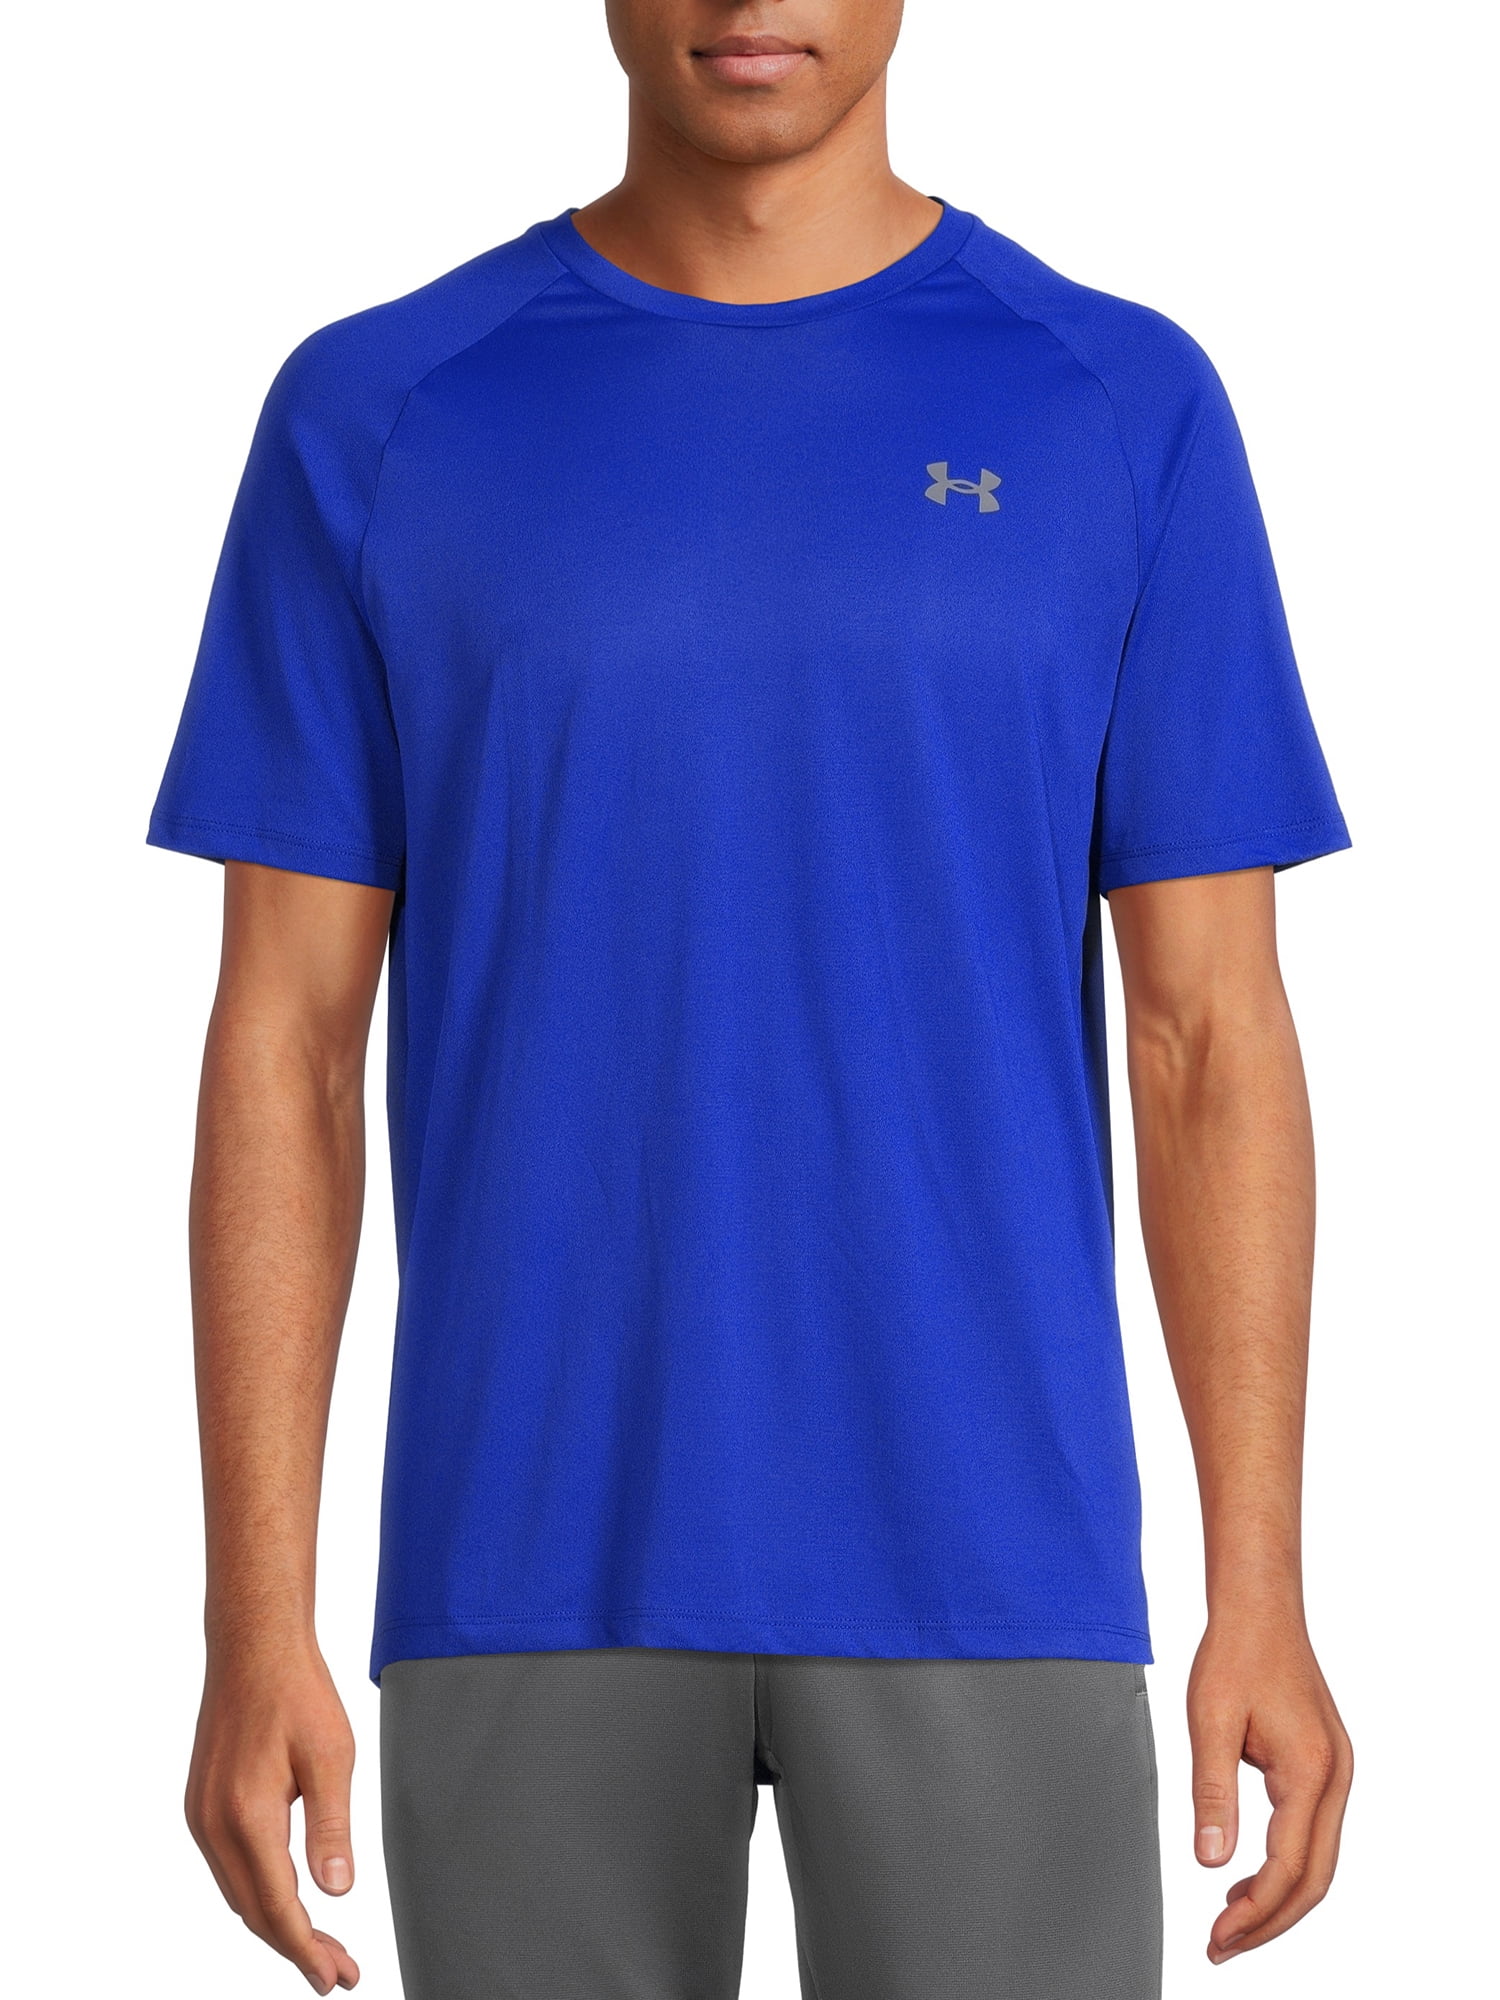 NWT Youth Boys Size 6 Under Armour Blue Black Short Sleeve Logo Shirt Set Of 2 